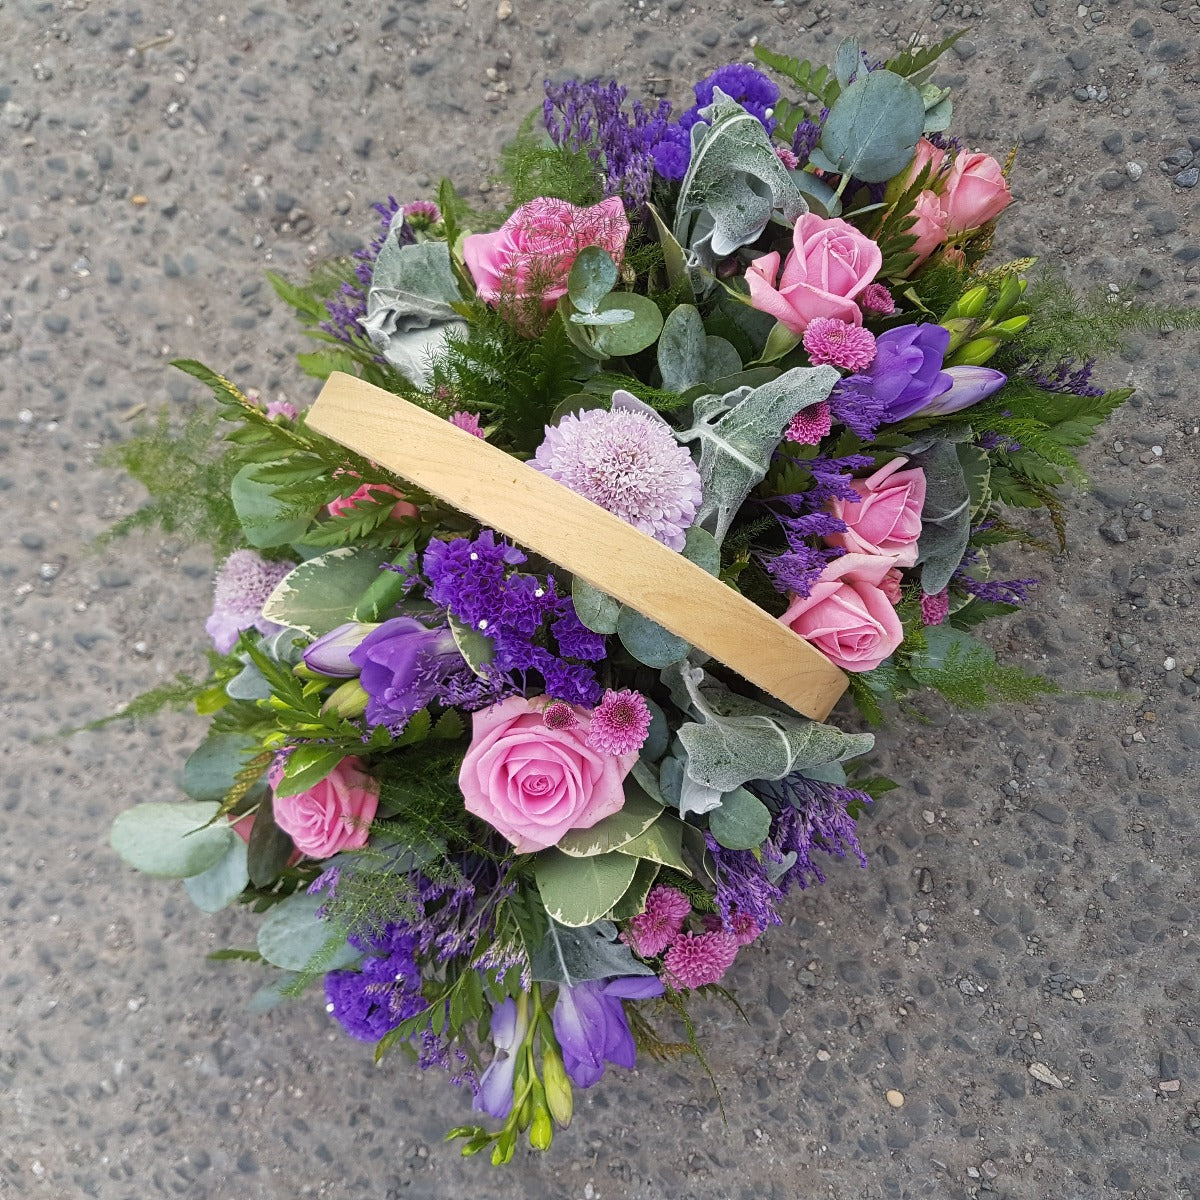 Florie's Flower Basket Funeral Tribute